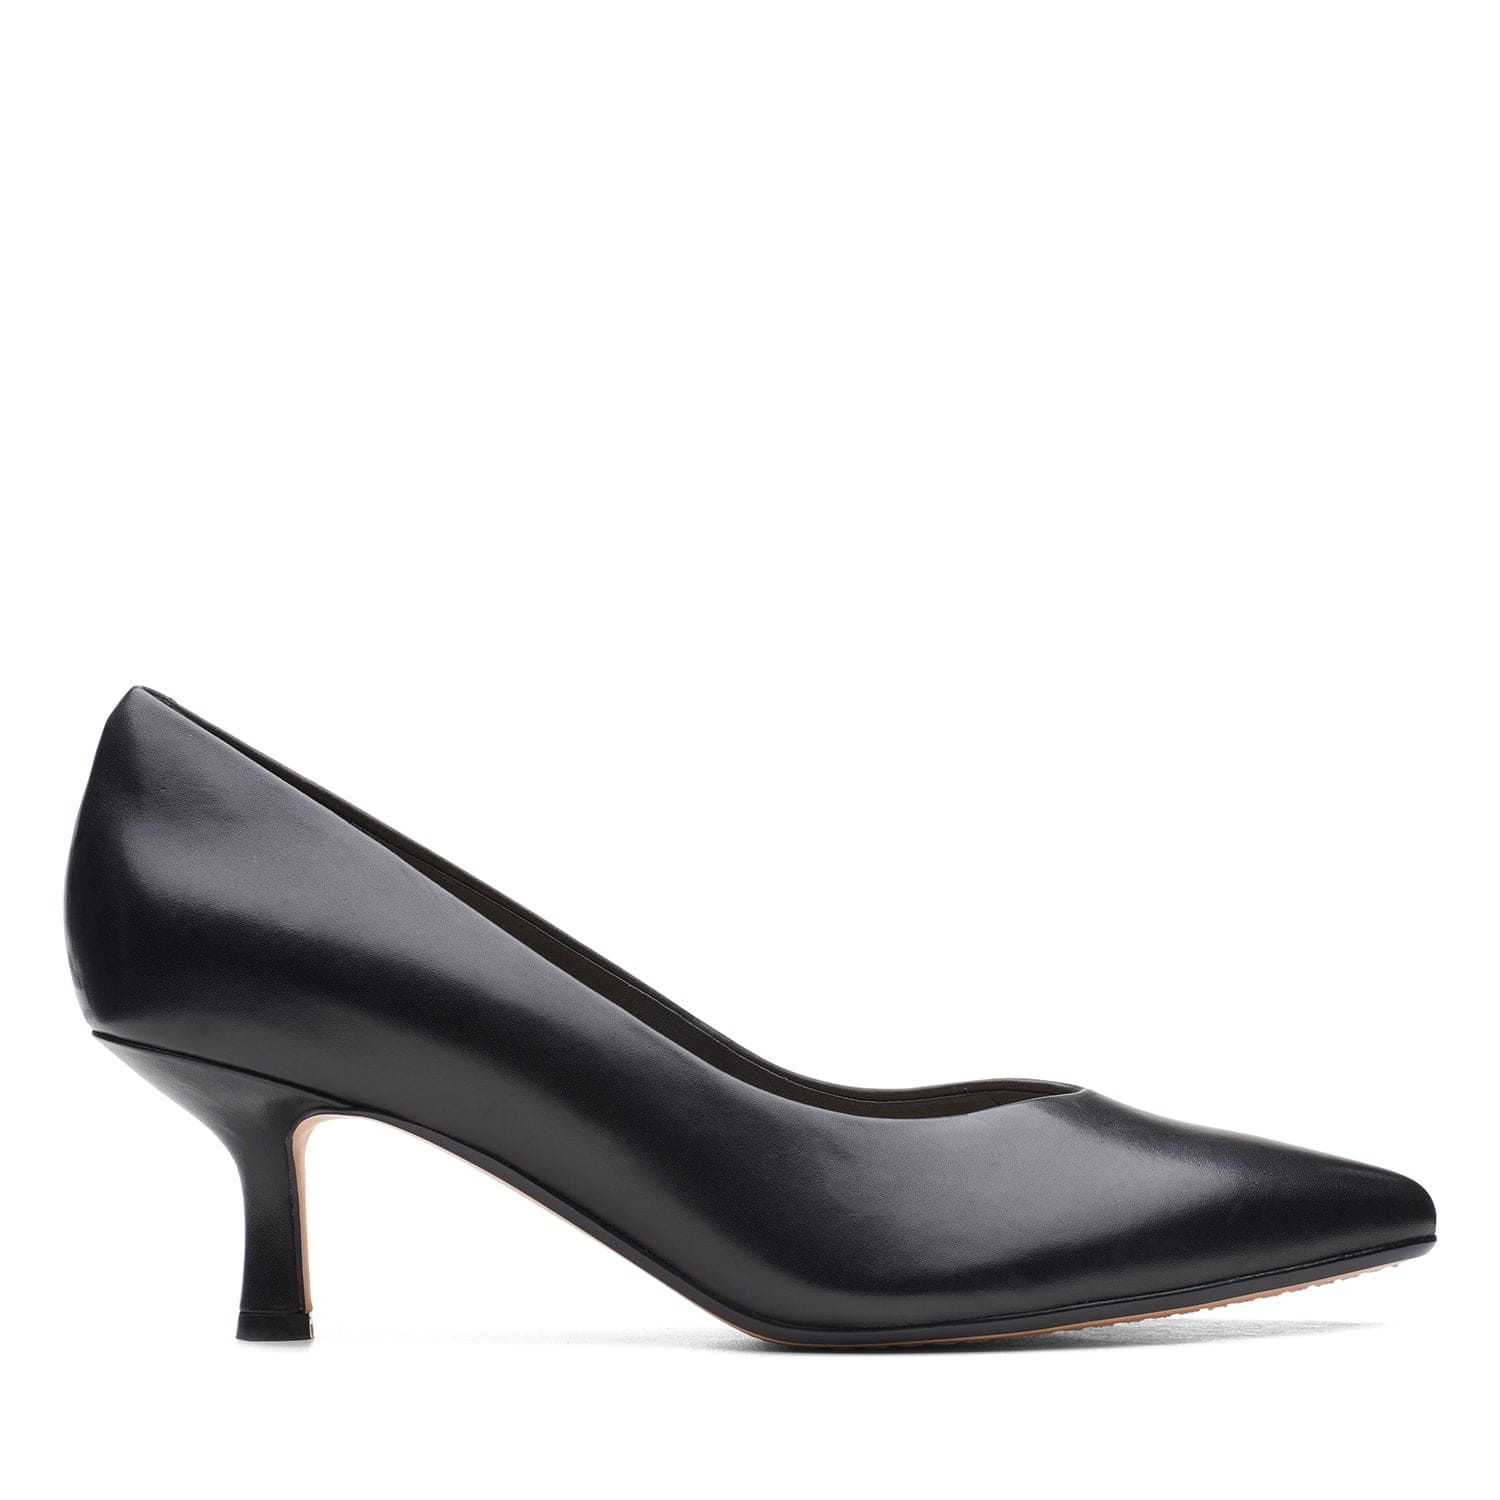 Clarks Violet55 Court Shoes - Black Leather - 261615334 - D Width (Standard Fit)